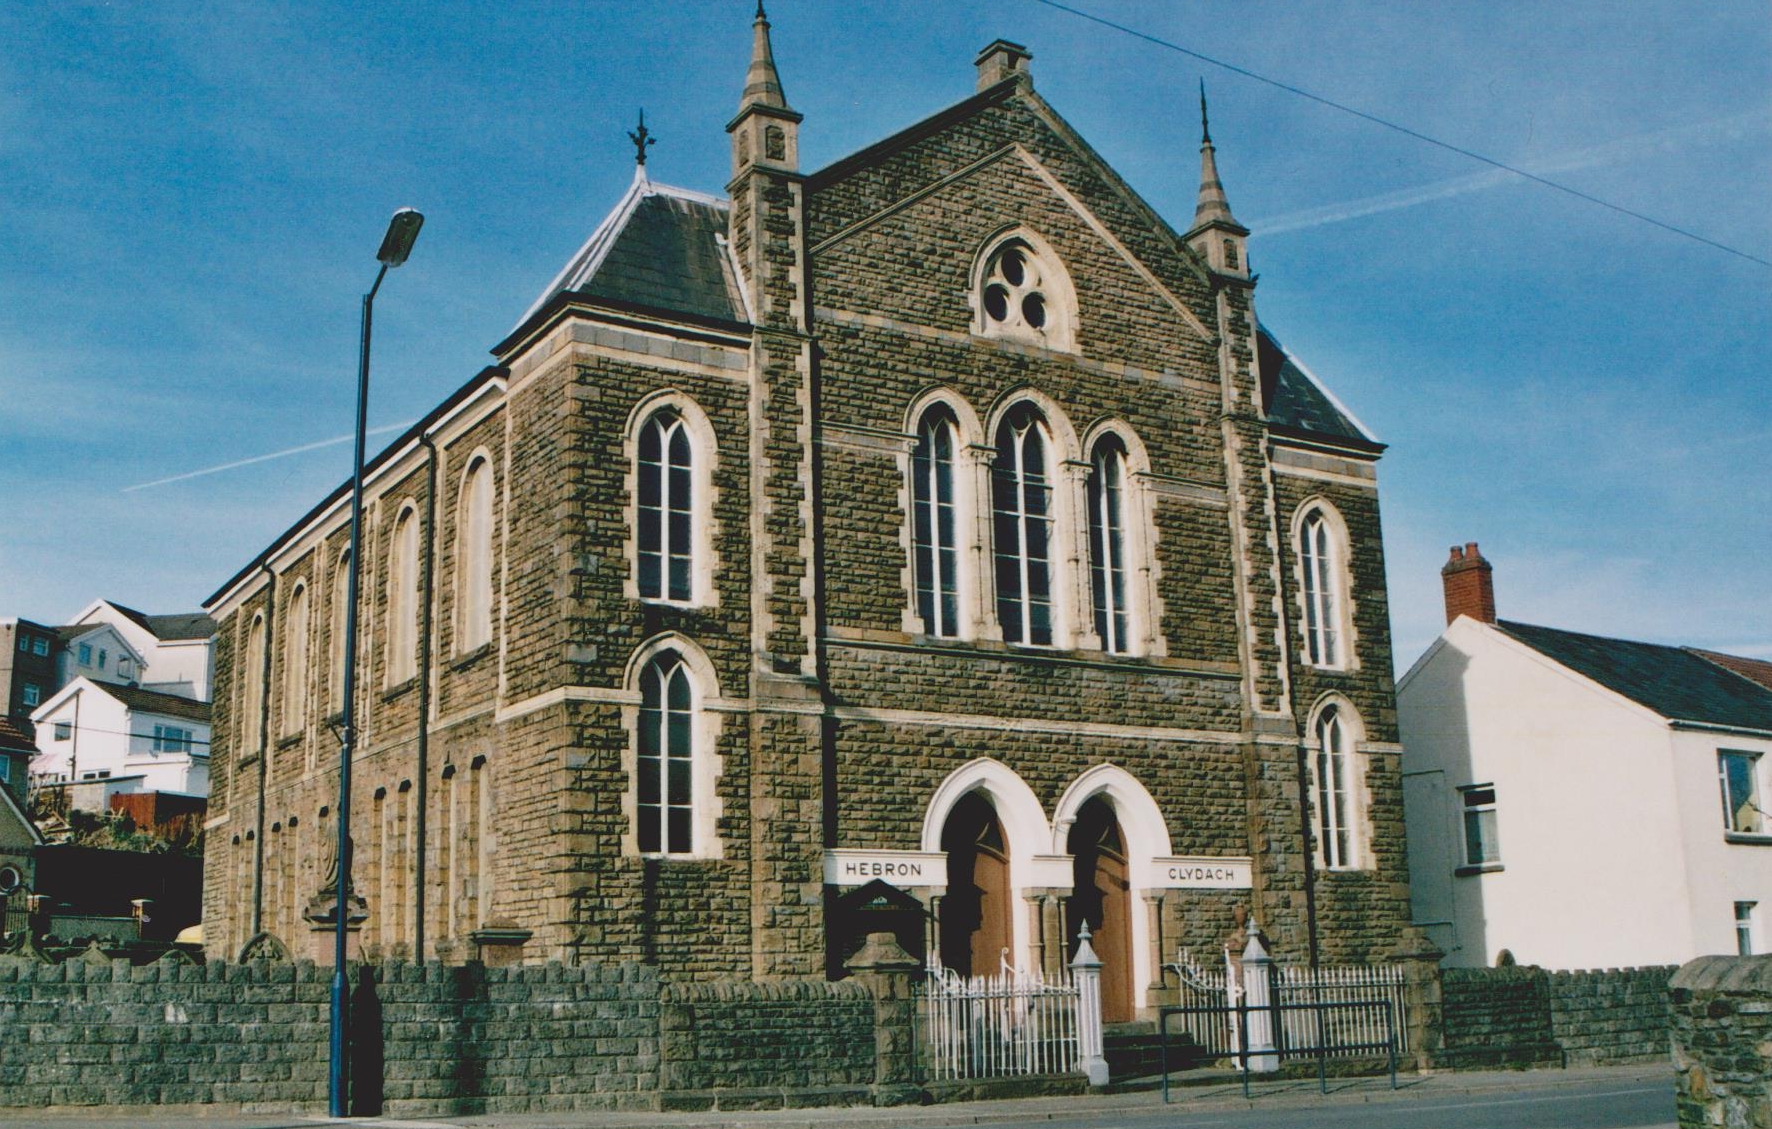 Hebron Chapel, Clydach